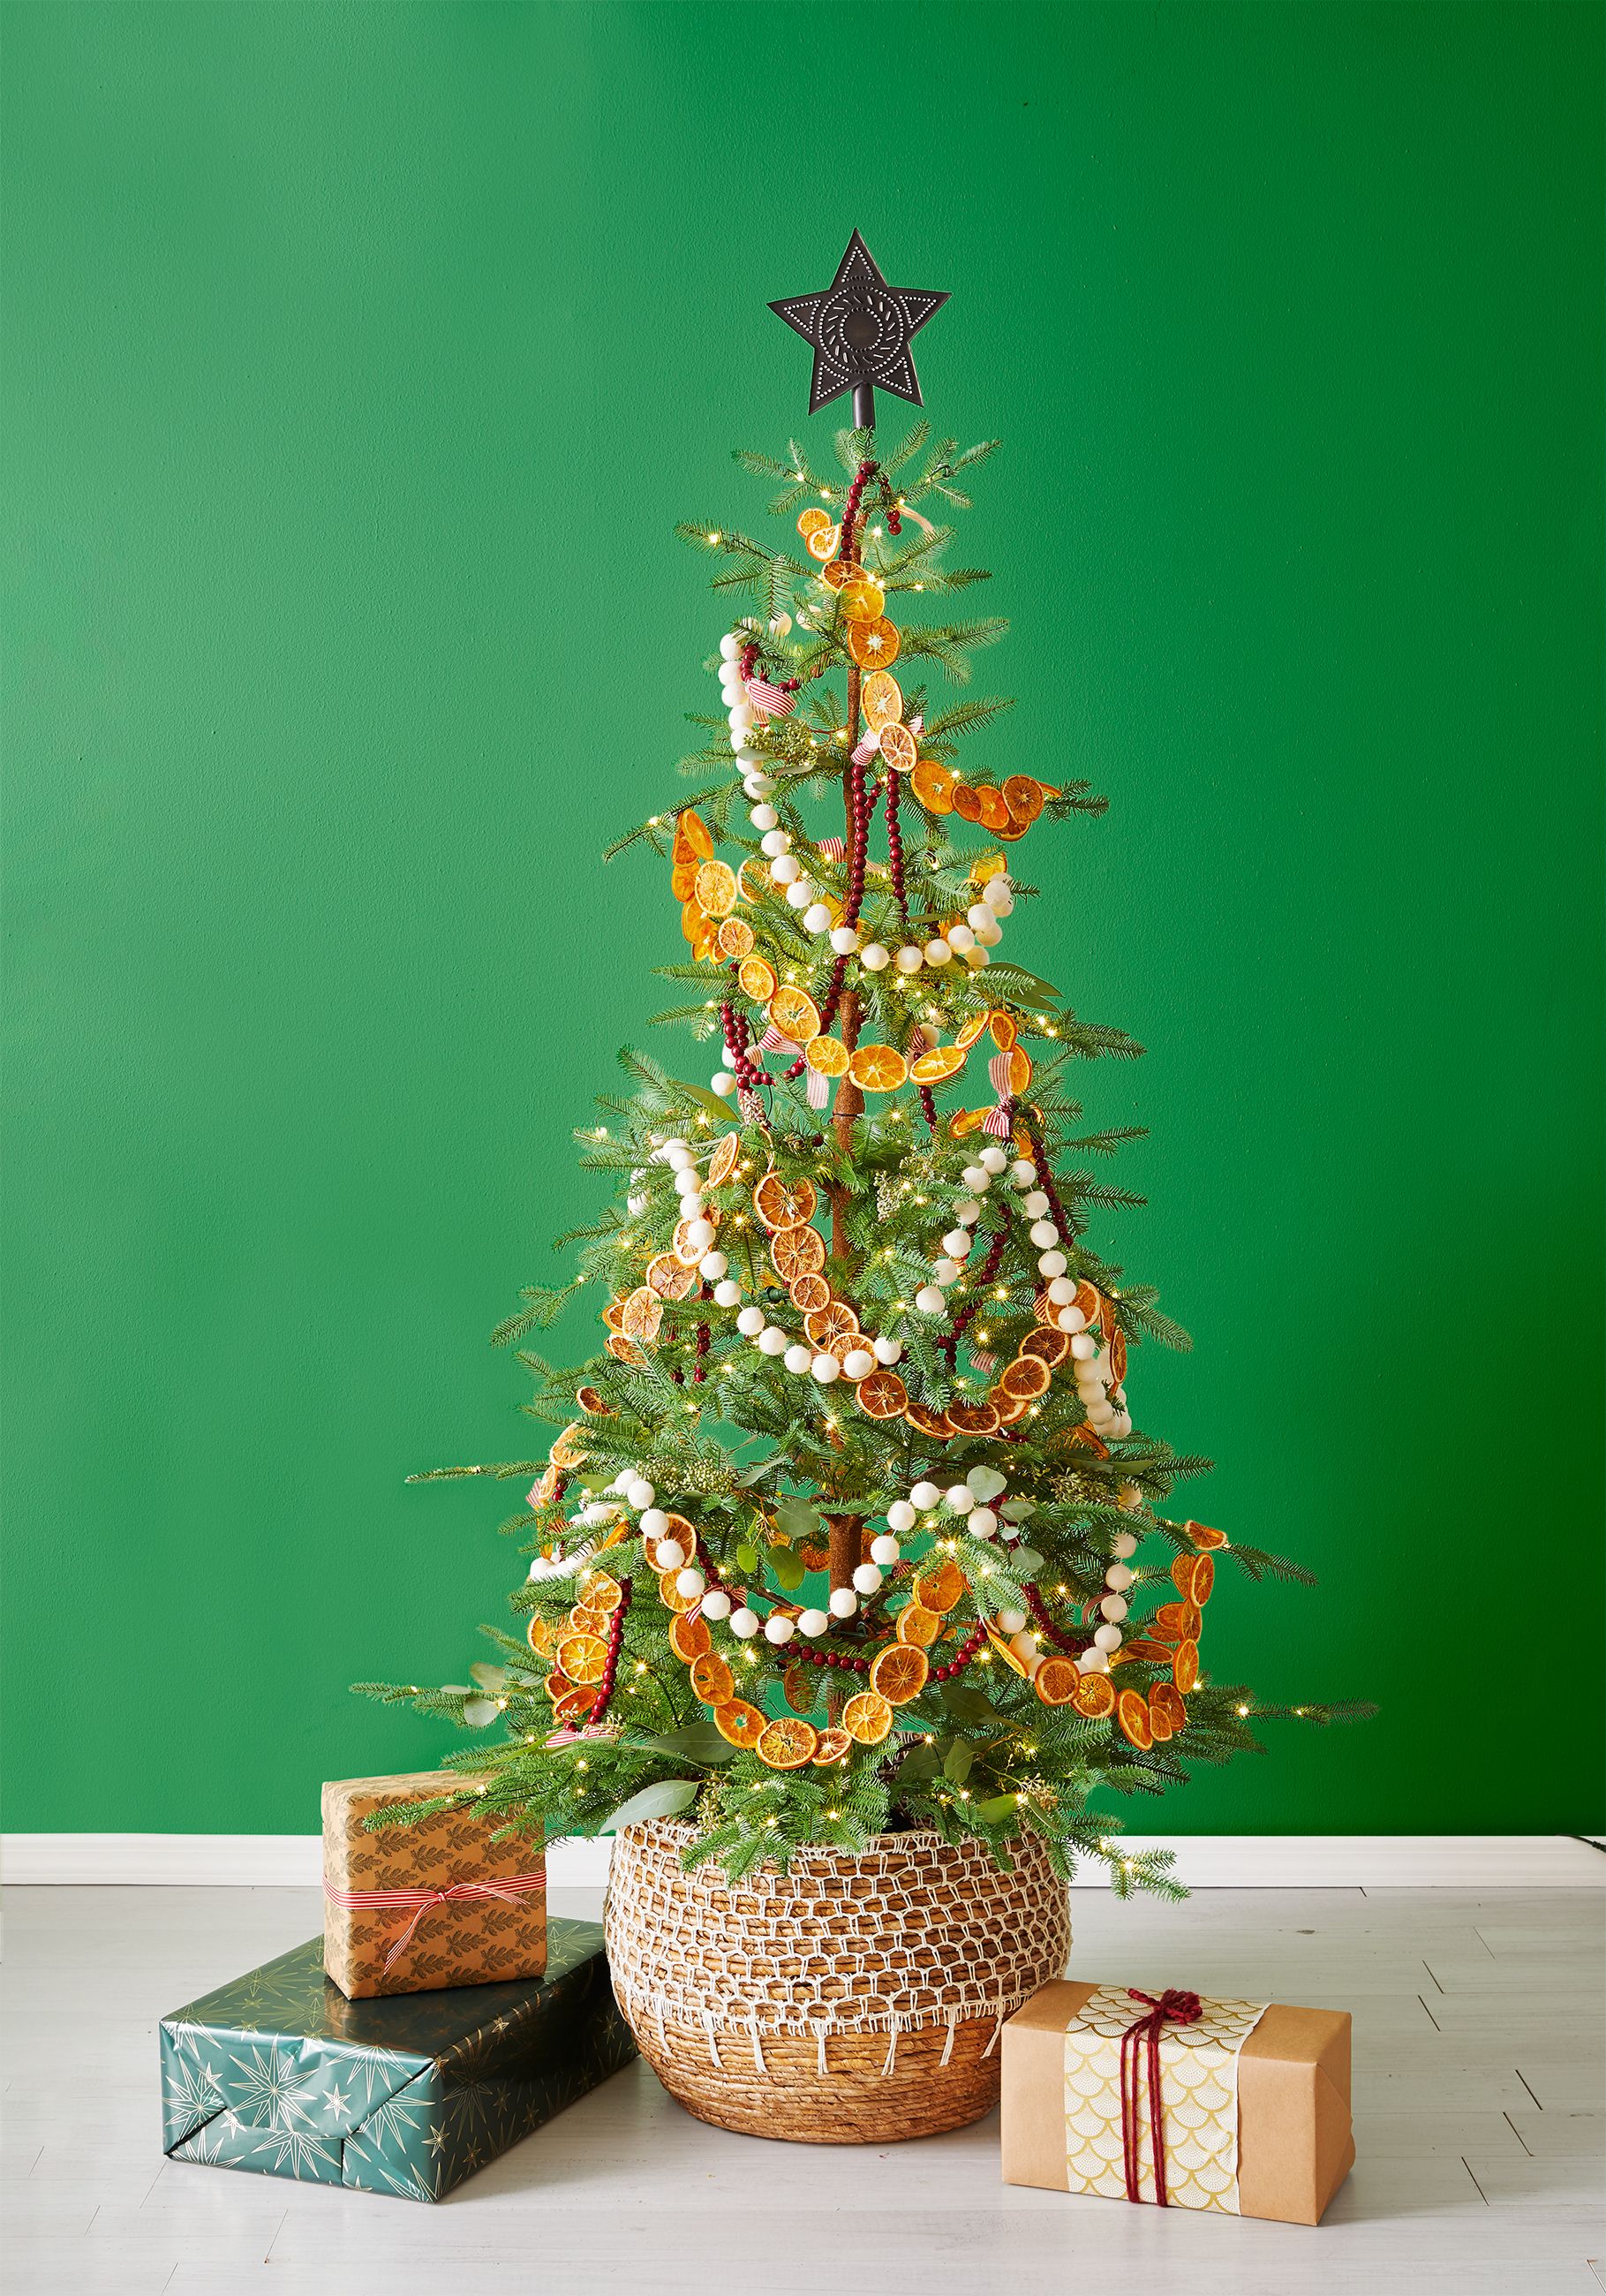 10 Santa Claus Christmas Tree Decorating Ideas to Make Your Holidays ...